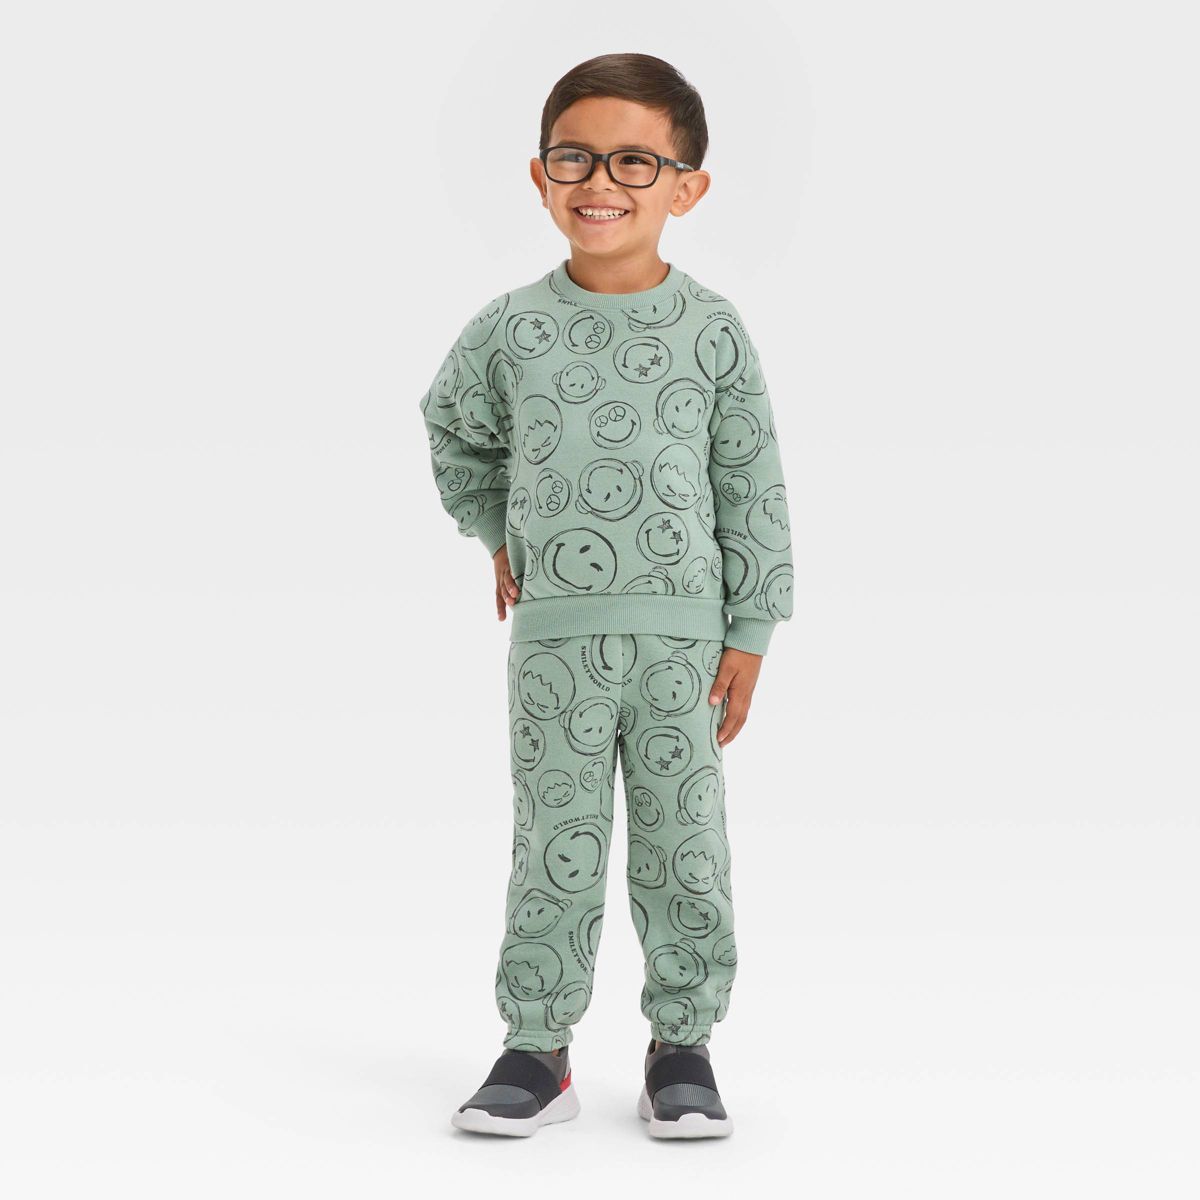 Toddler Boys' SmileyWorld Top and Bottom Set - Green | Target